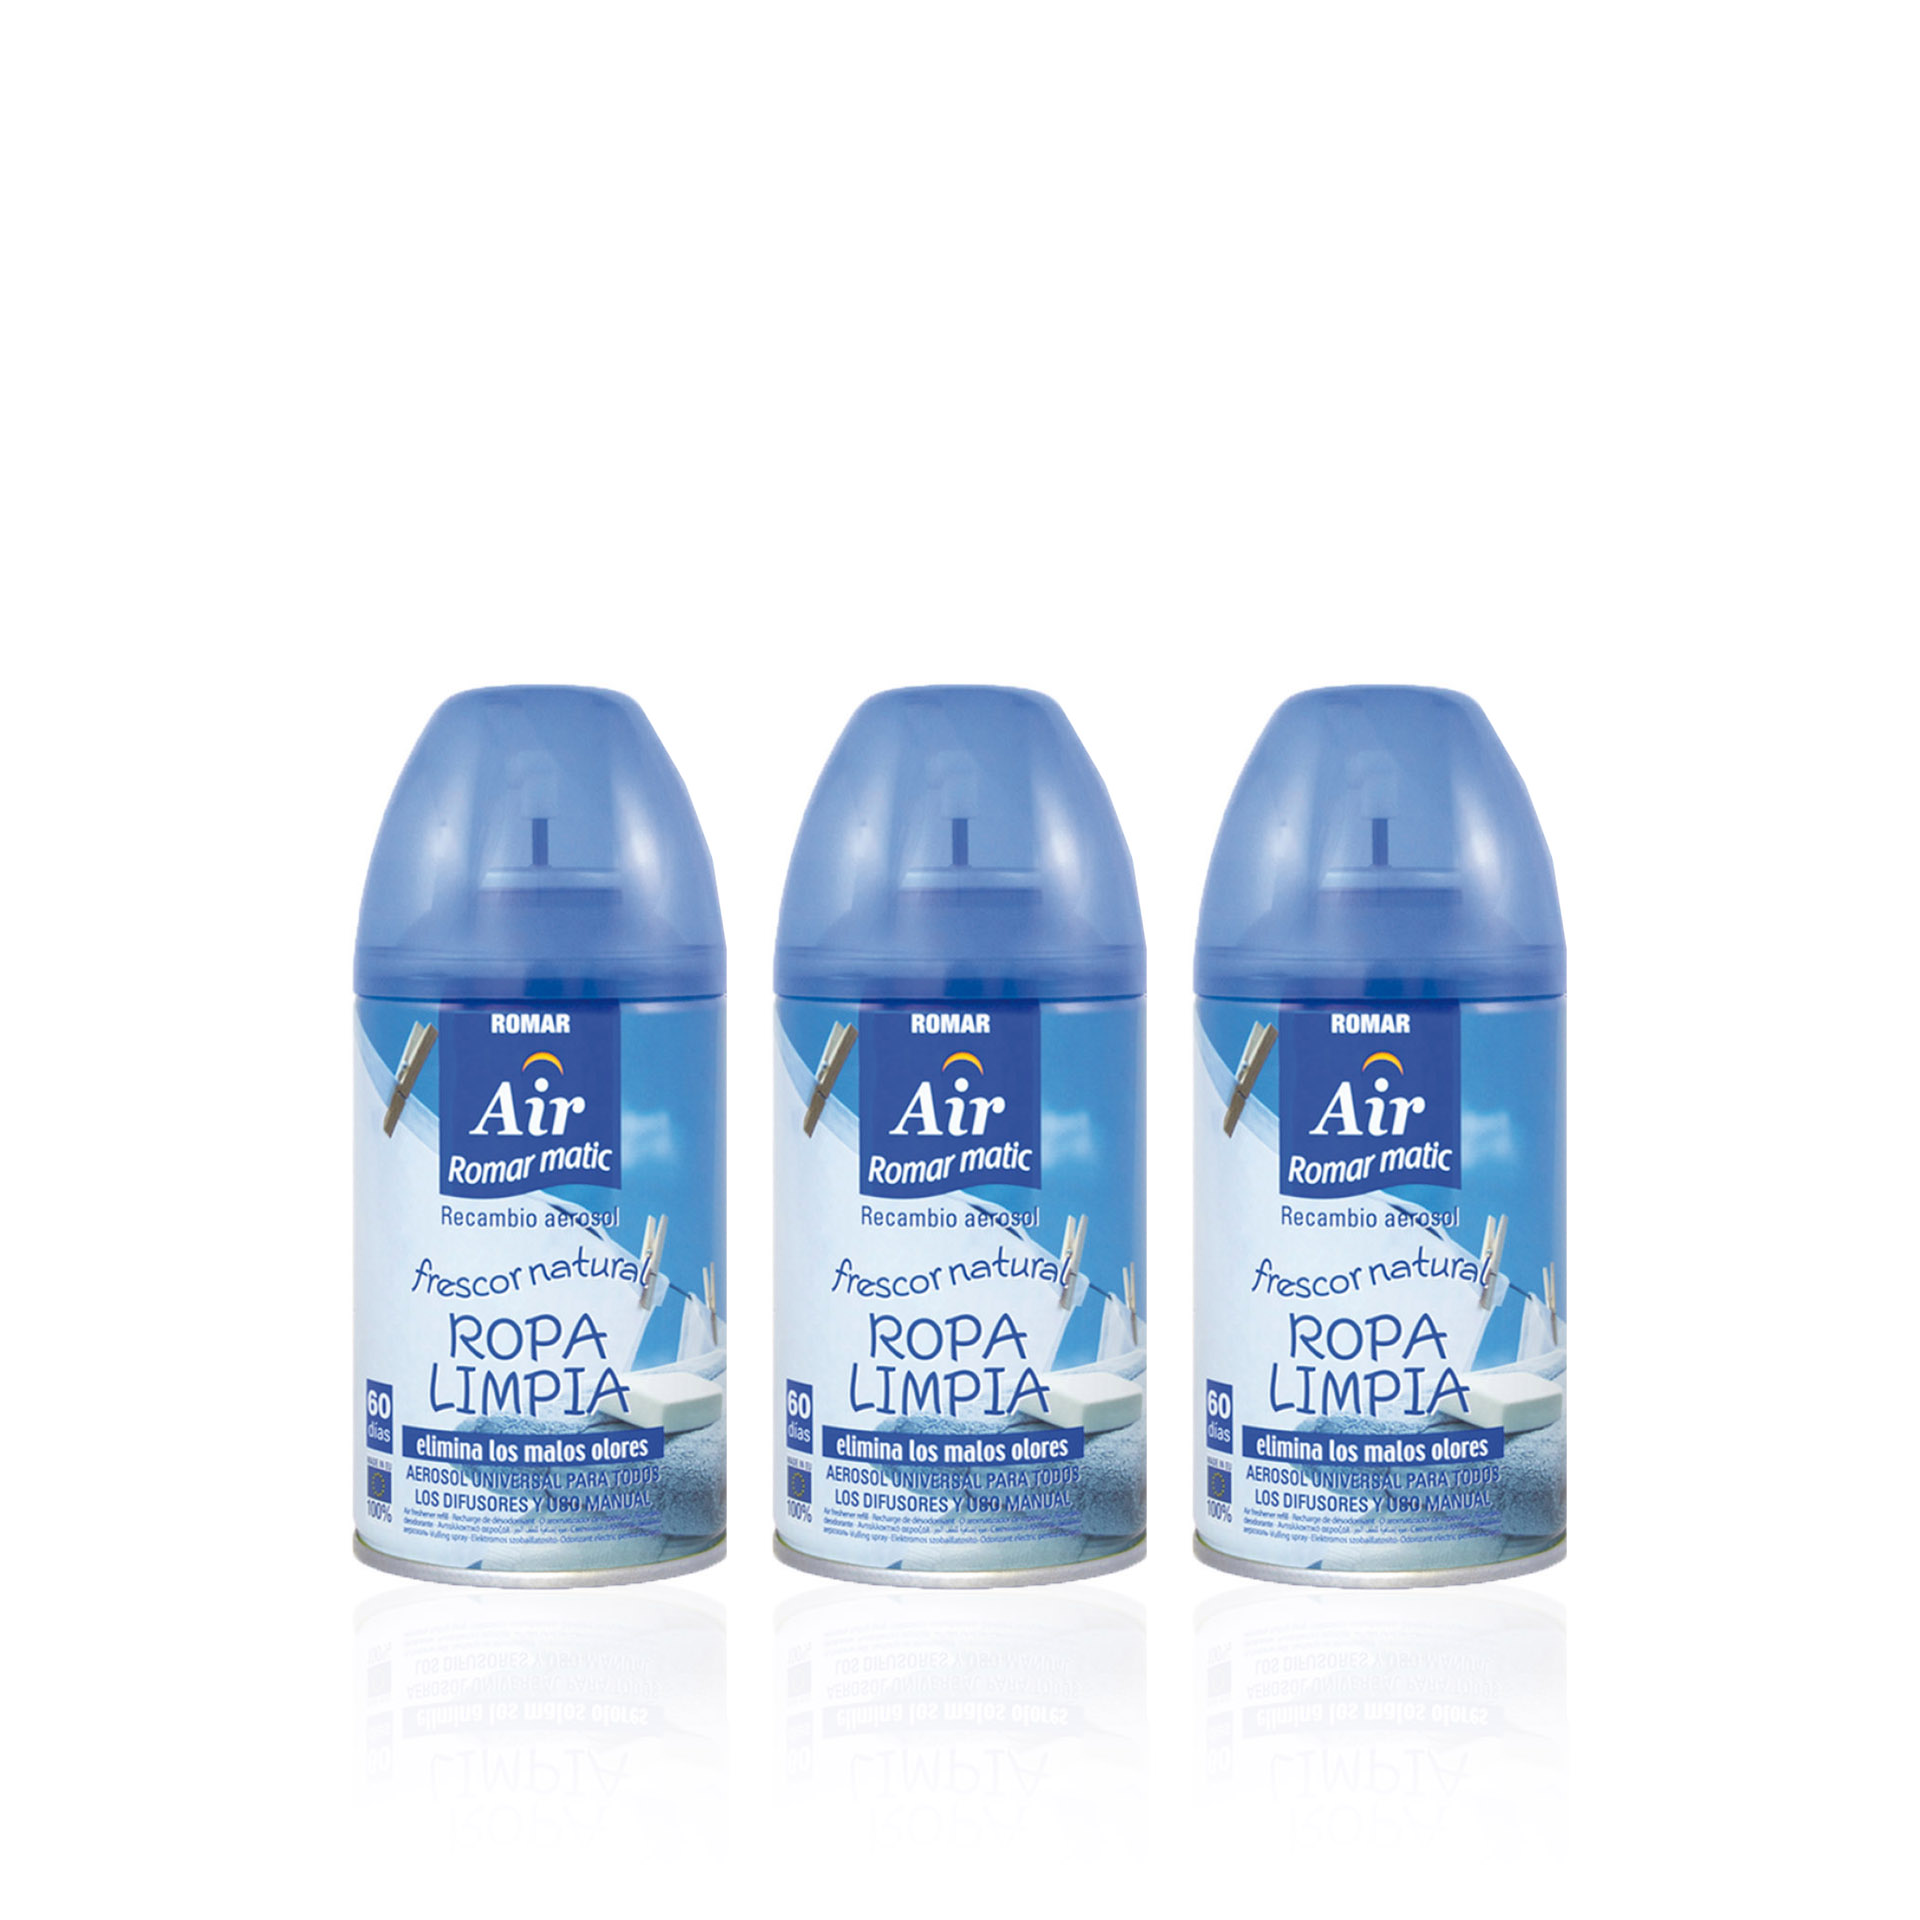 Romar Ambientador Spray Recarga Roupa Limpa 250 ml - Pack 3 x 250 ml